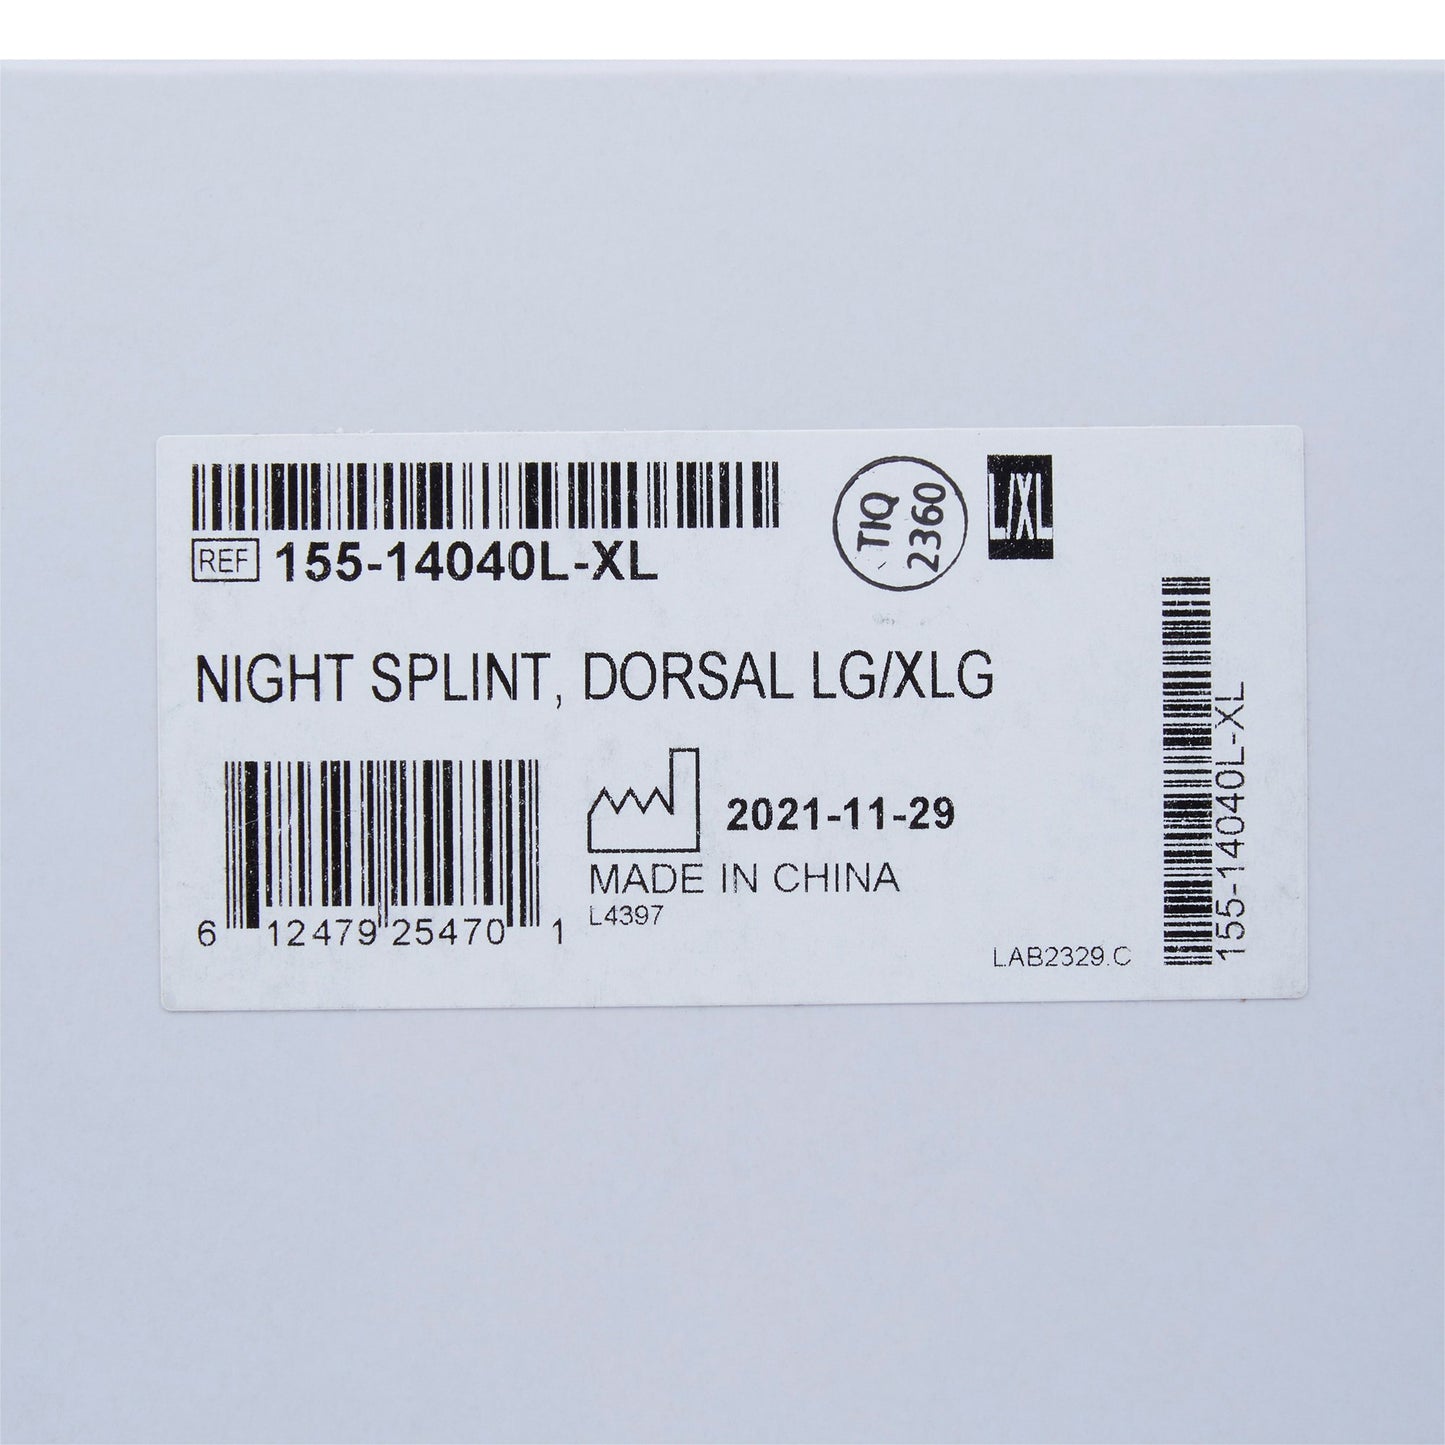 McKesson Low Profile Dorsal Night Splint, Large / XL